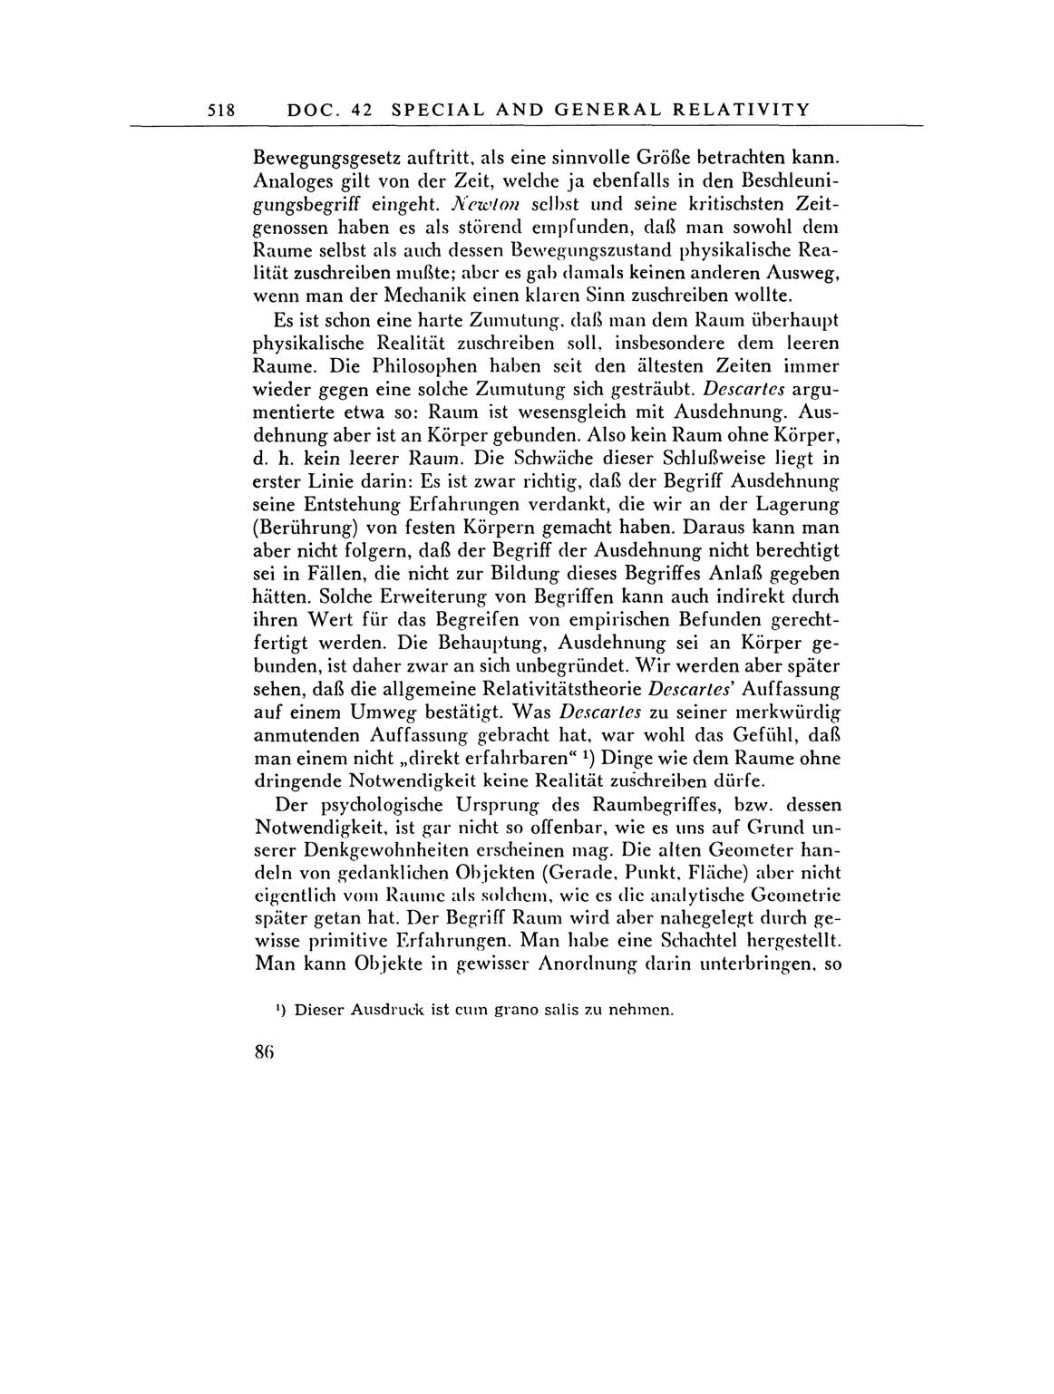 Volume 6: The Berlin Years: Writings, 1914-1917 page 518